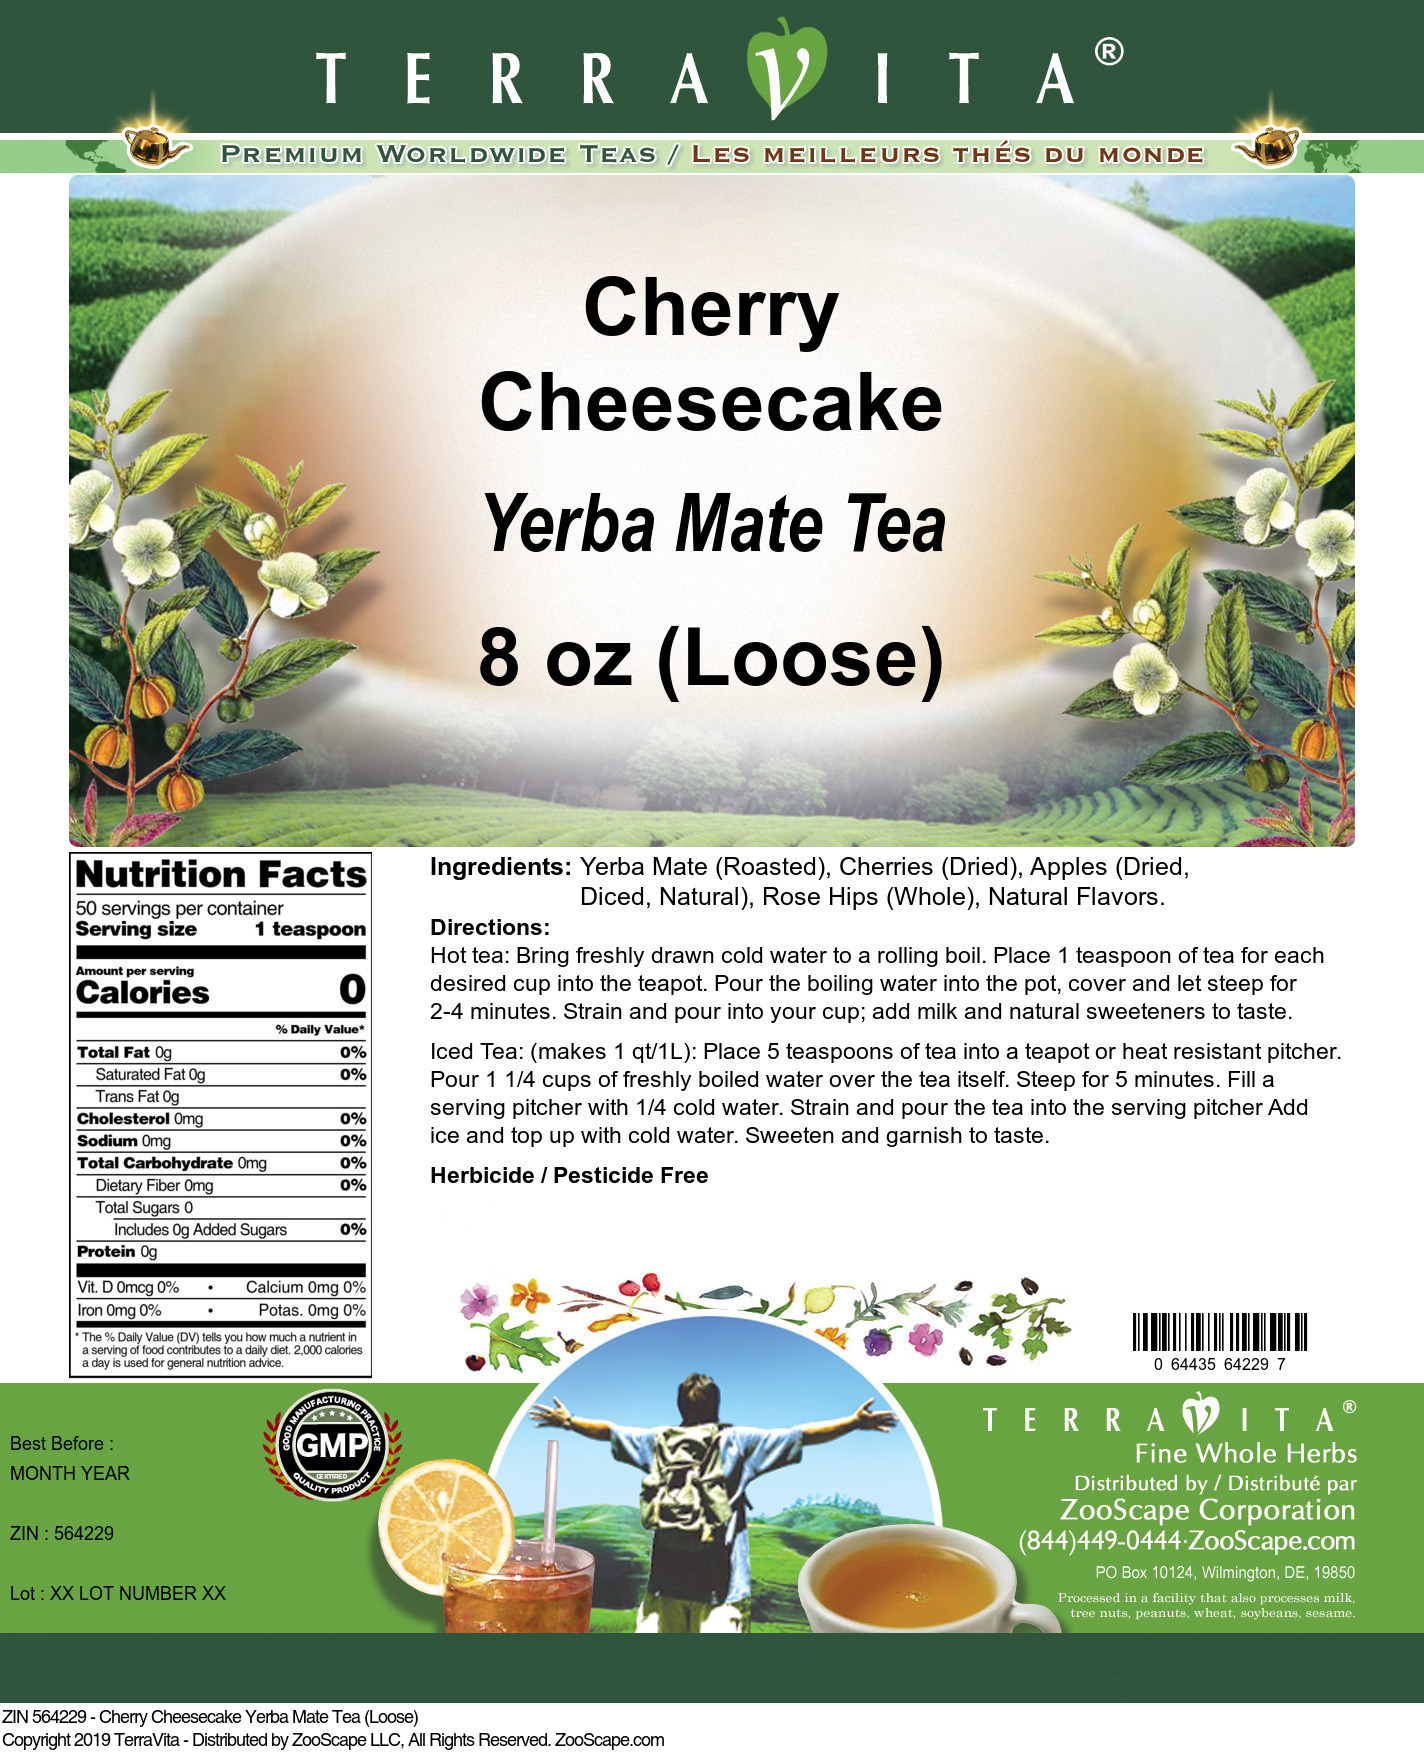 Cherry Cheesecake Yerba Mate Tea (Loose) - Label